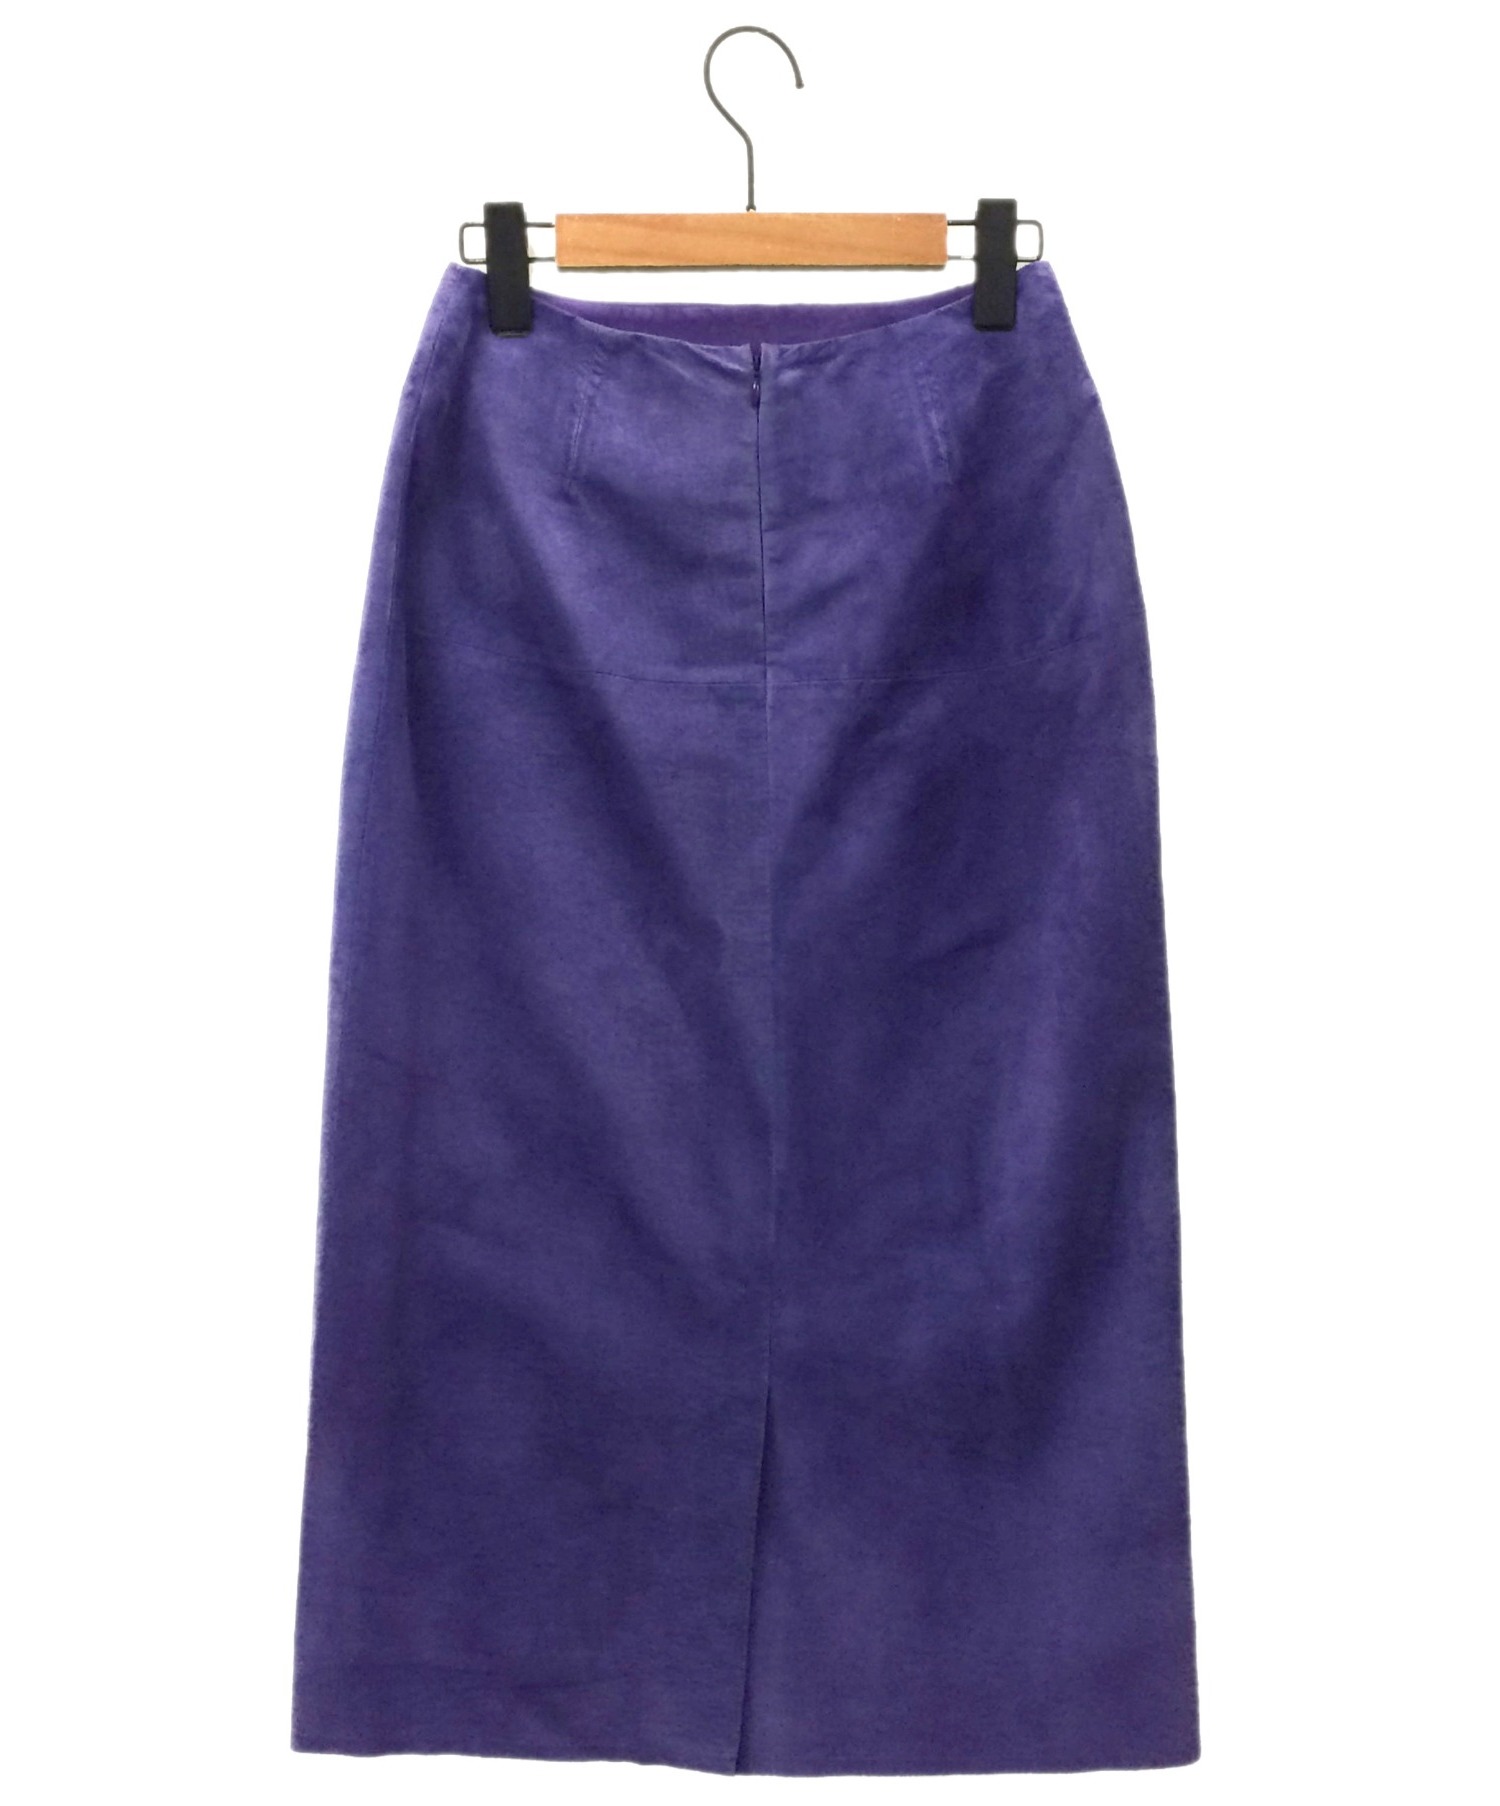 BLUEBIRD BOULEVARD for RonHerman skirt. - ロングスカート